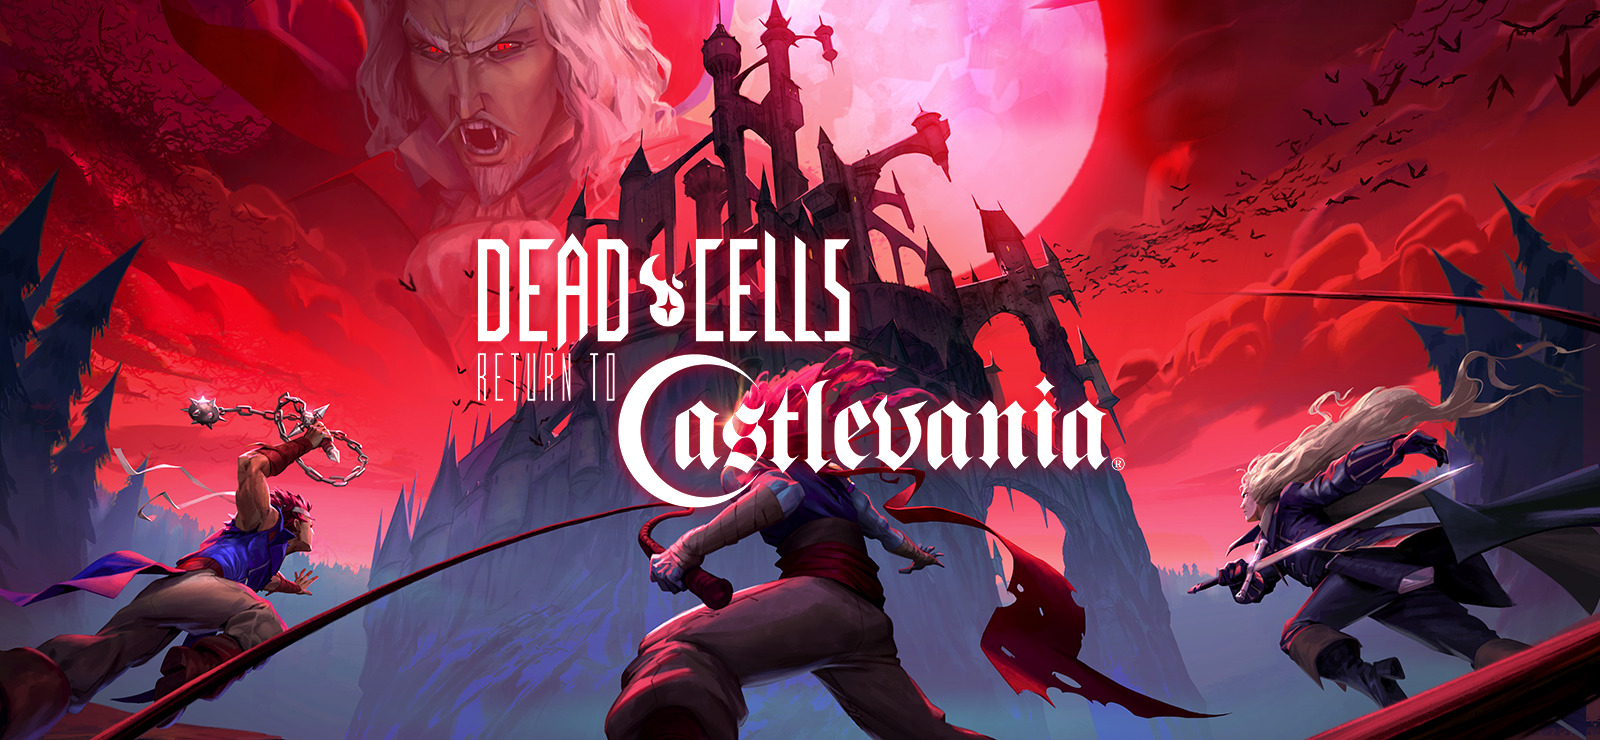 dead cells return to castlevania steam